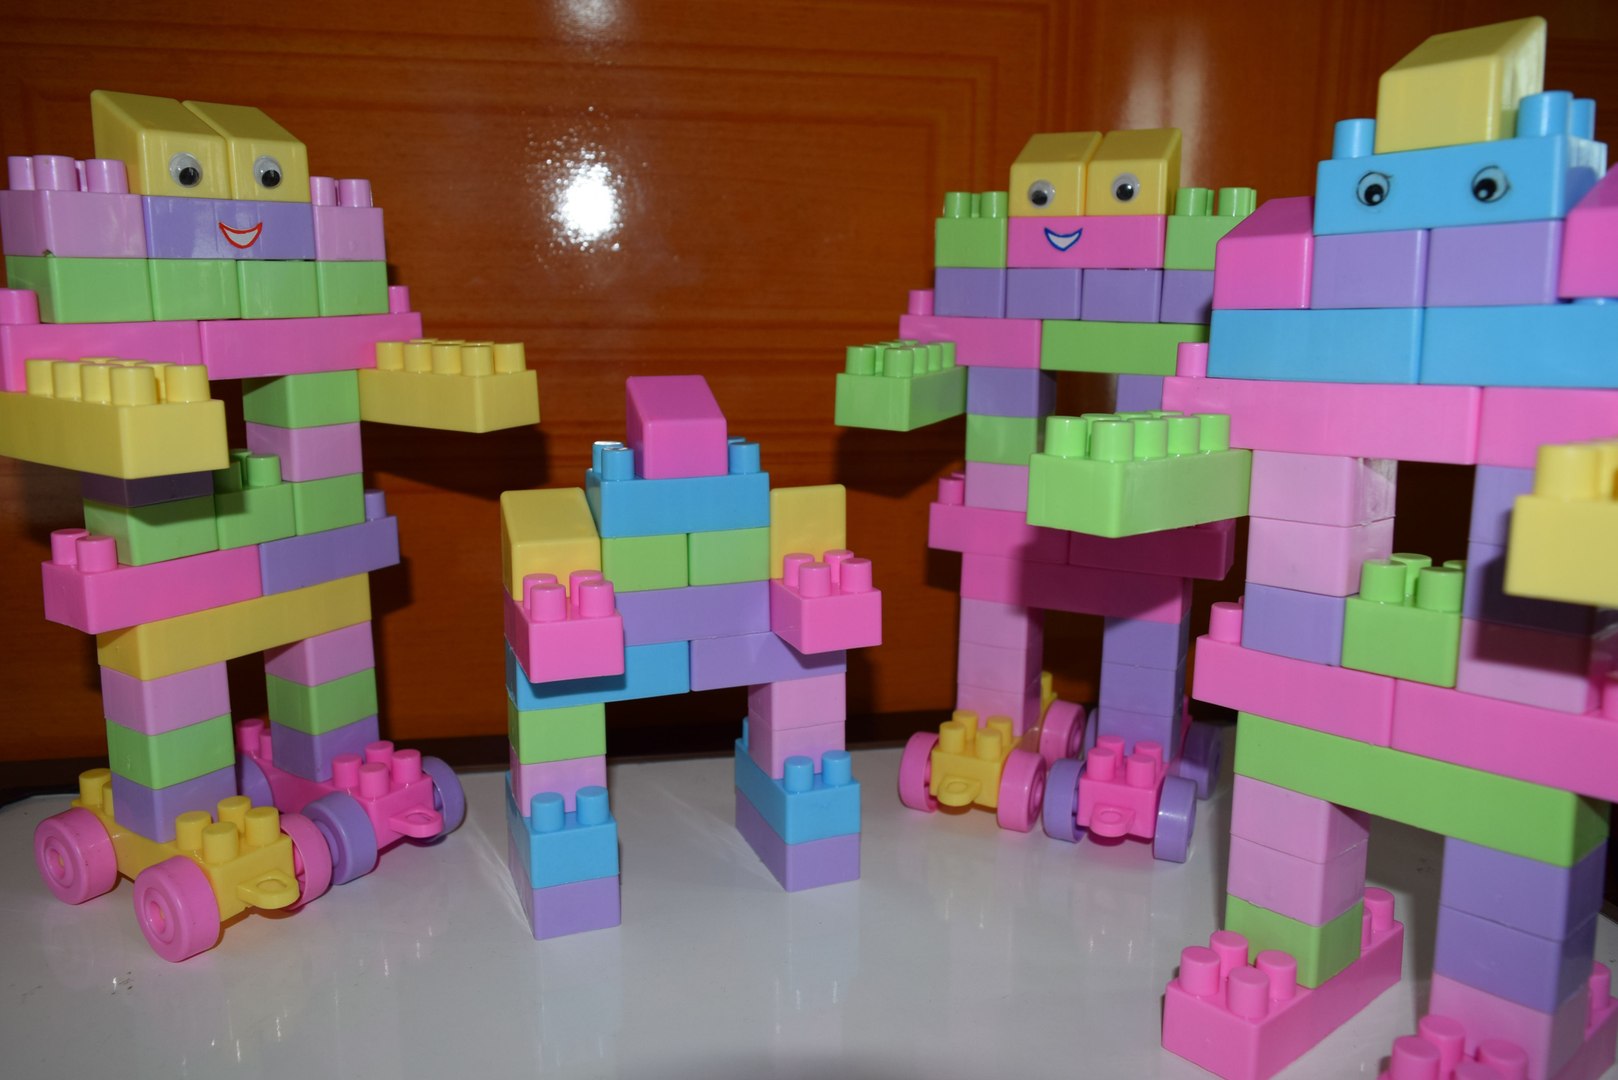 Membuat Robot Lego  Make A Lego  Robot Video Dailymotion